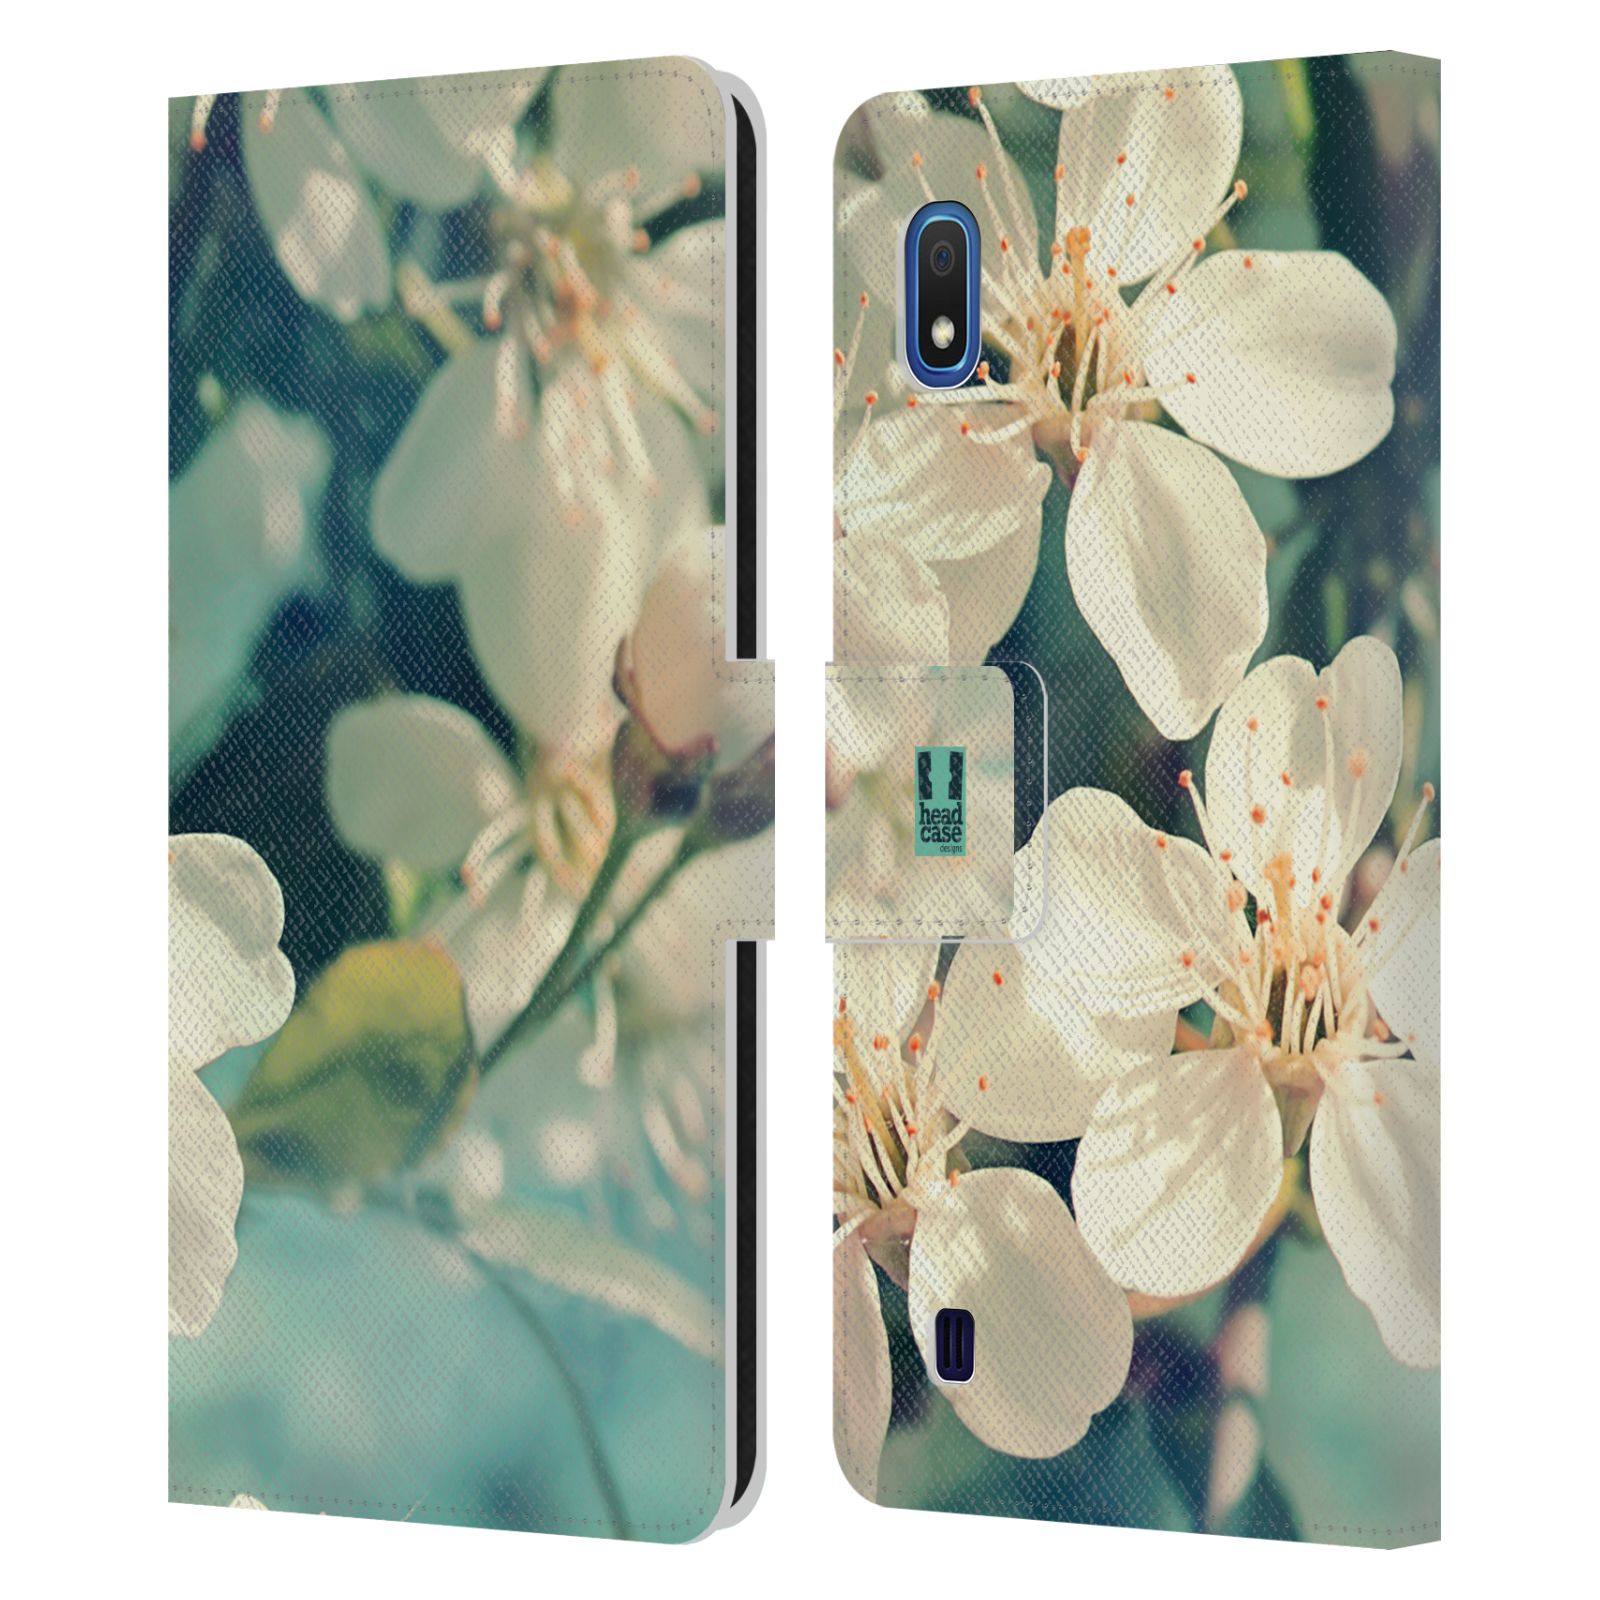 Pouzdro na mobil Samsung Galaxy A10 květy foto rozkvetlá třešeň